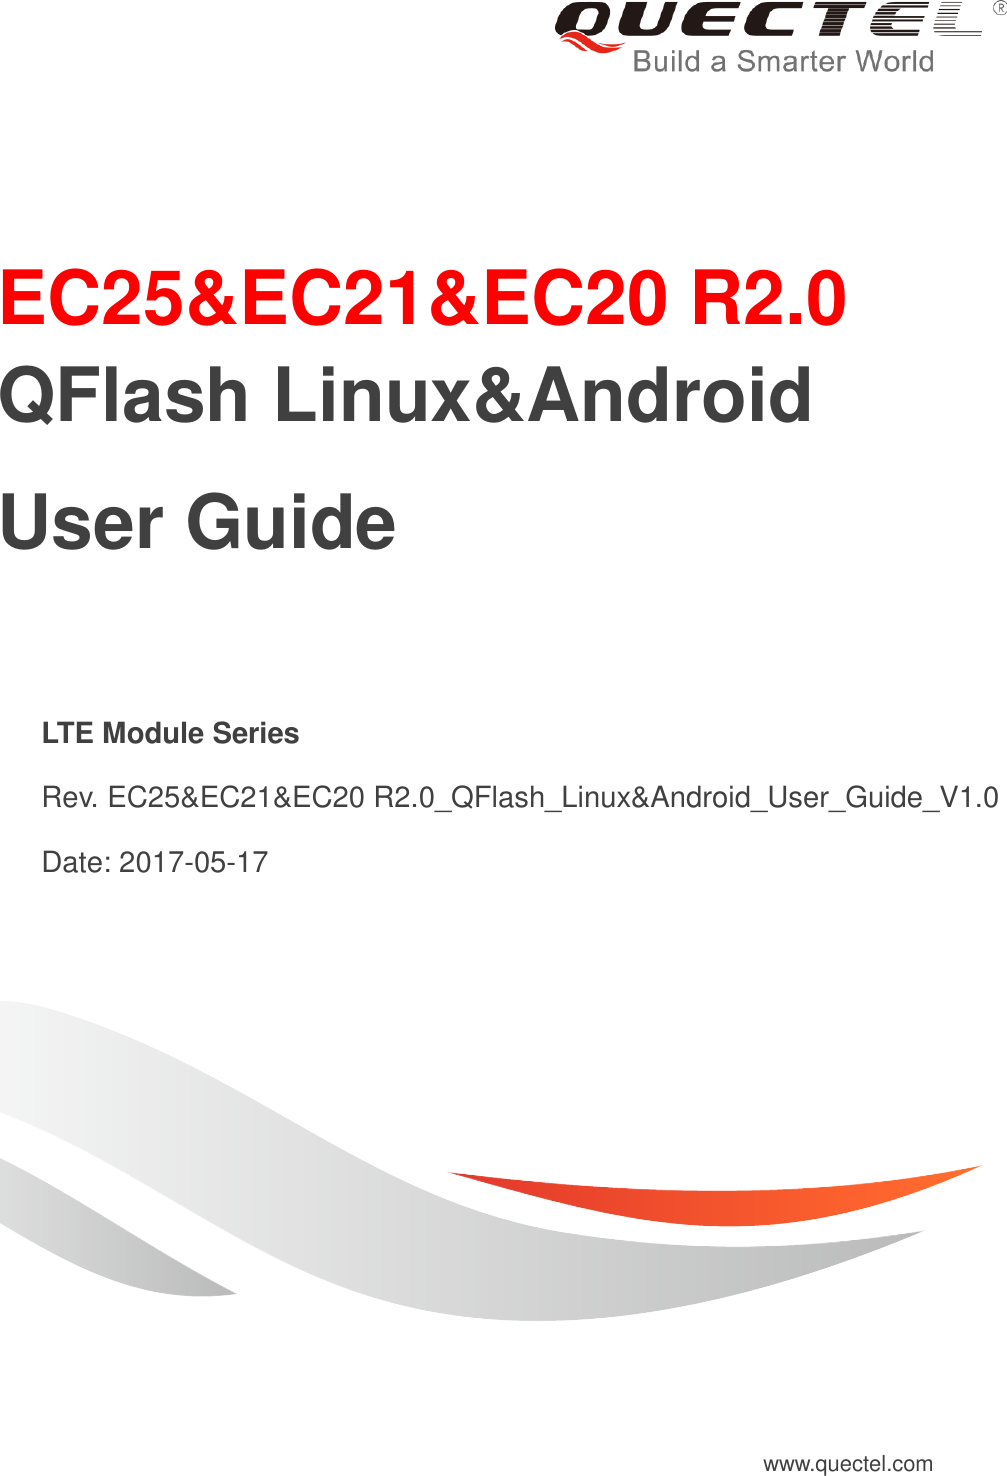 Page 1 of 11 - Quectel EC25&EC21&EC20 R2.0 QFlash Linux&Android User Guide V1.0